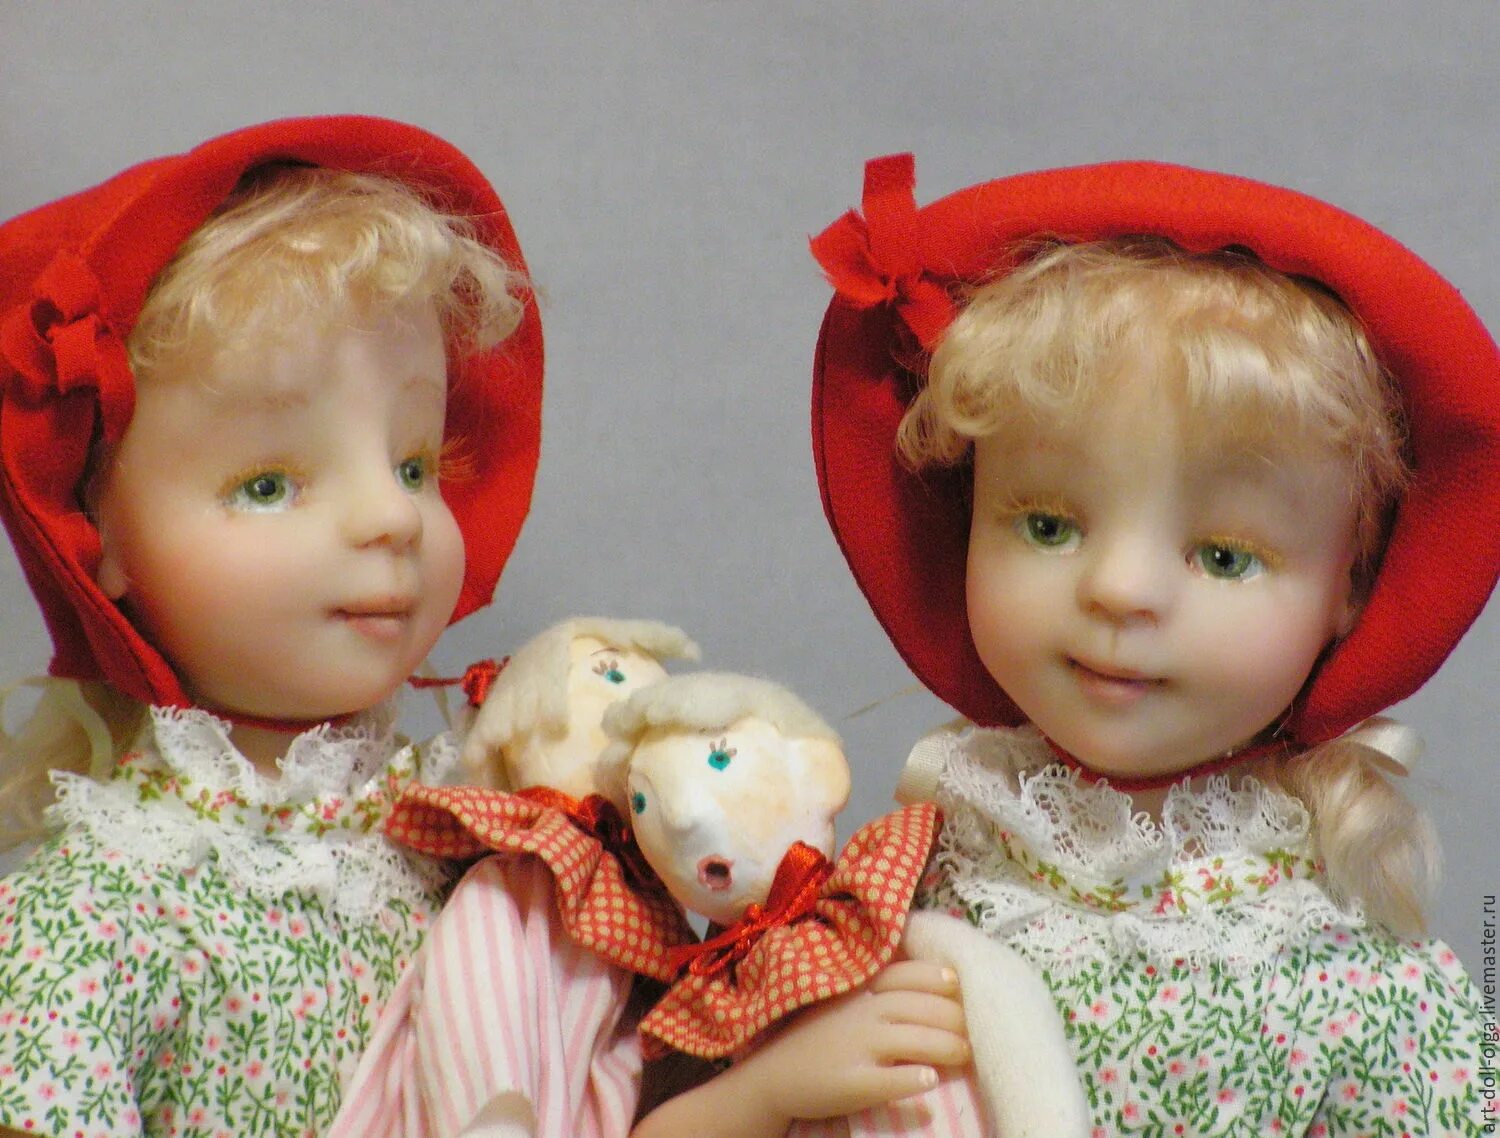 Красные куколки. Куклы красная шапочка фабрика Ленигрушка. Кукла "красная шапочка №2". Испанская кукла красная шапочка. Куклы две красных.